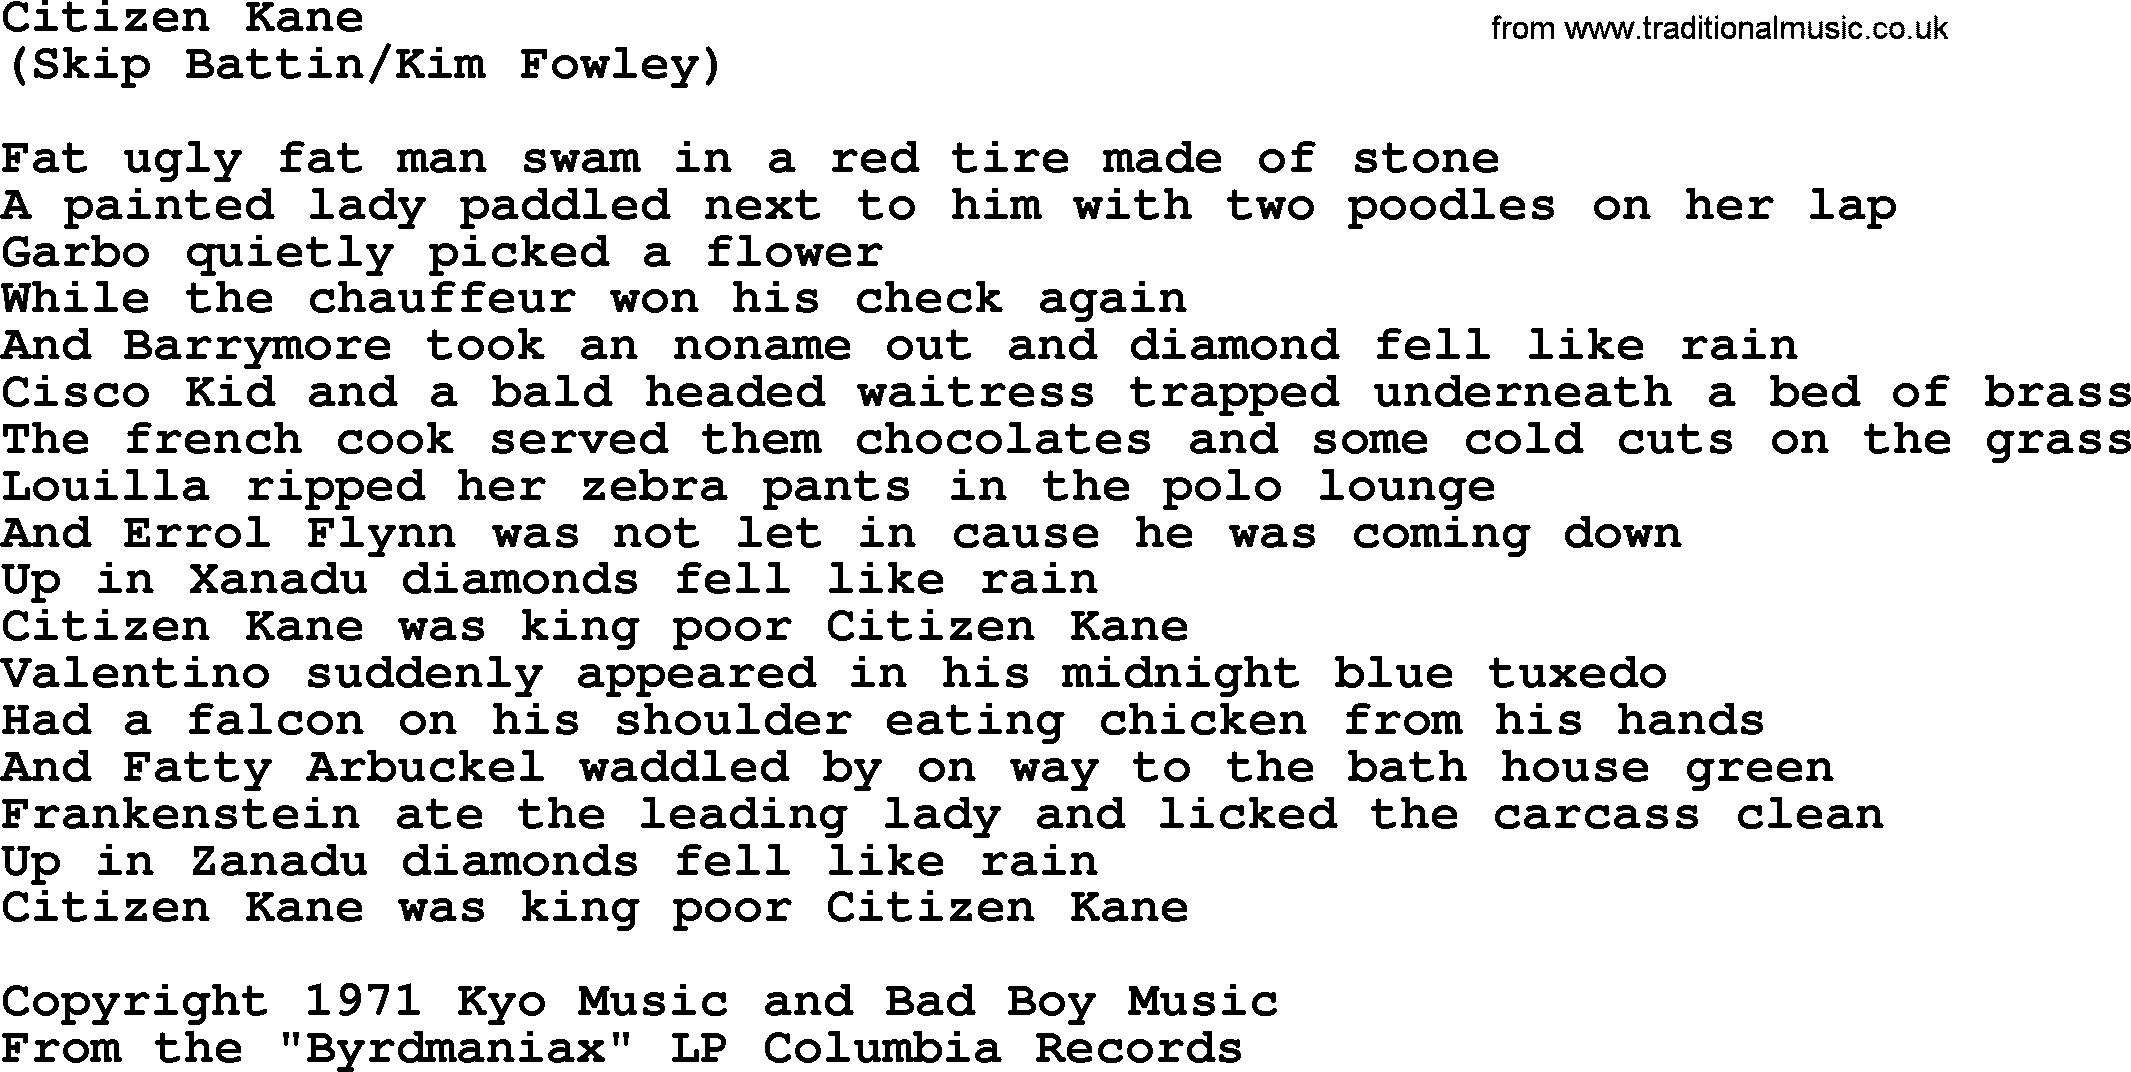 The Byrds song Citizen Kane, lyrics